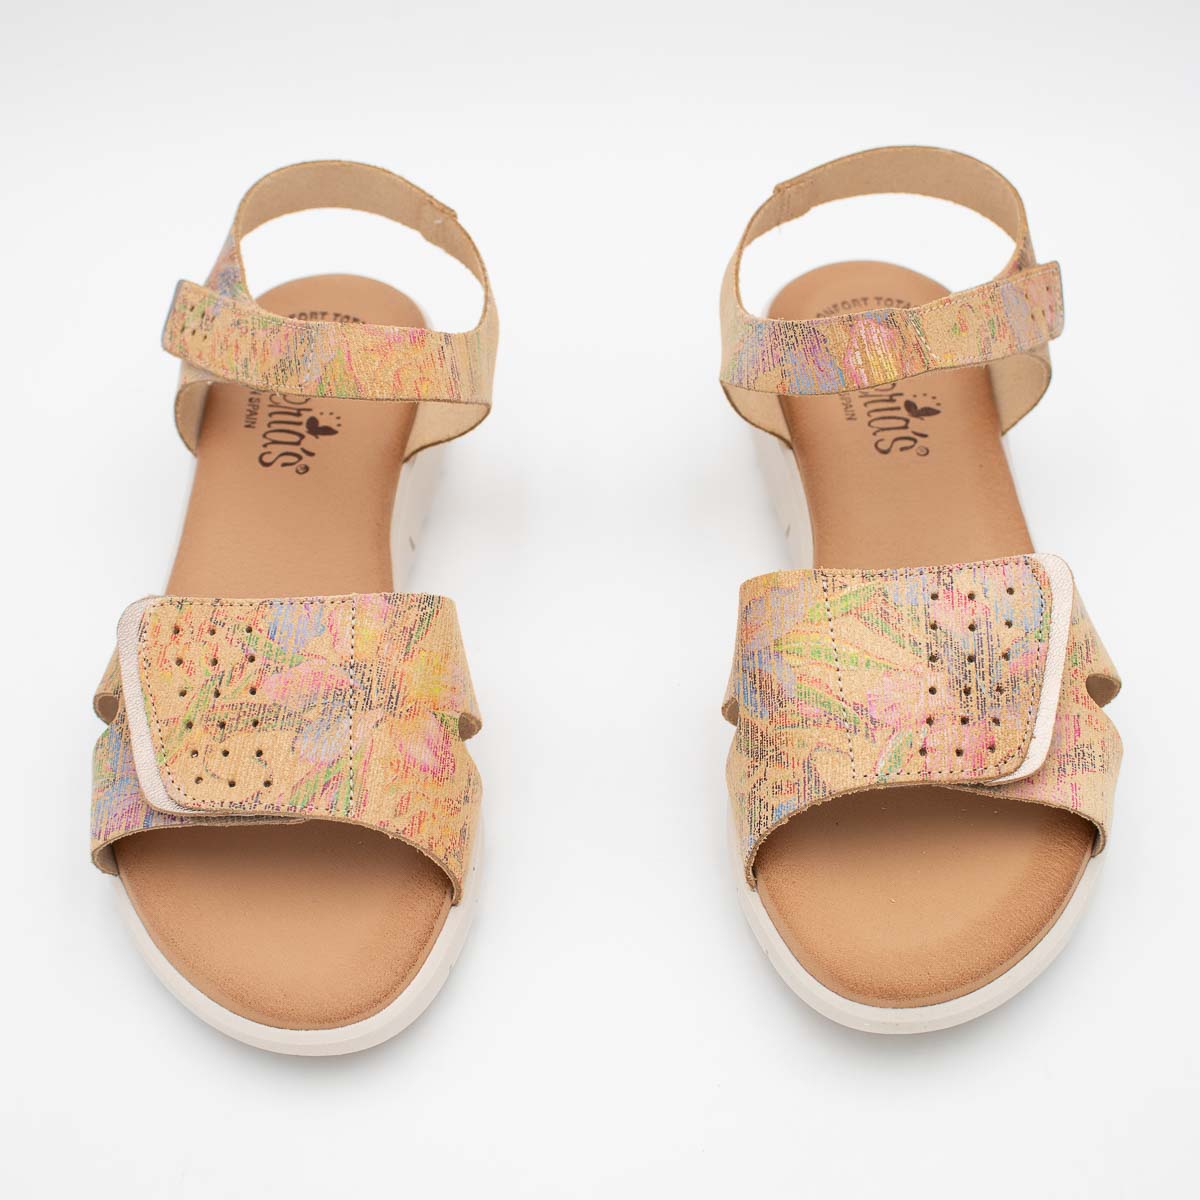 Velcro Strap Summer Sandals in Beige Multi